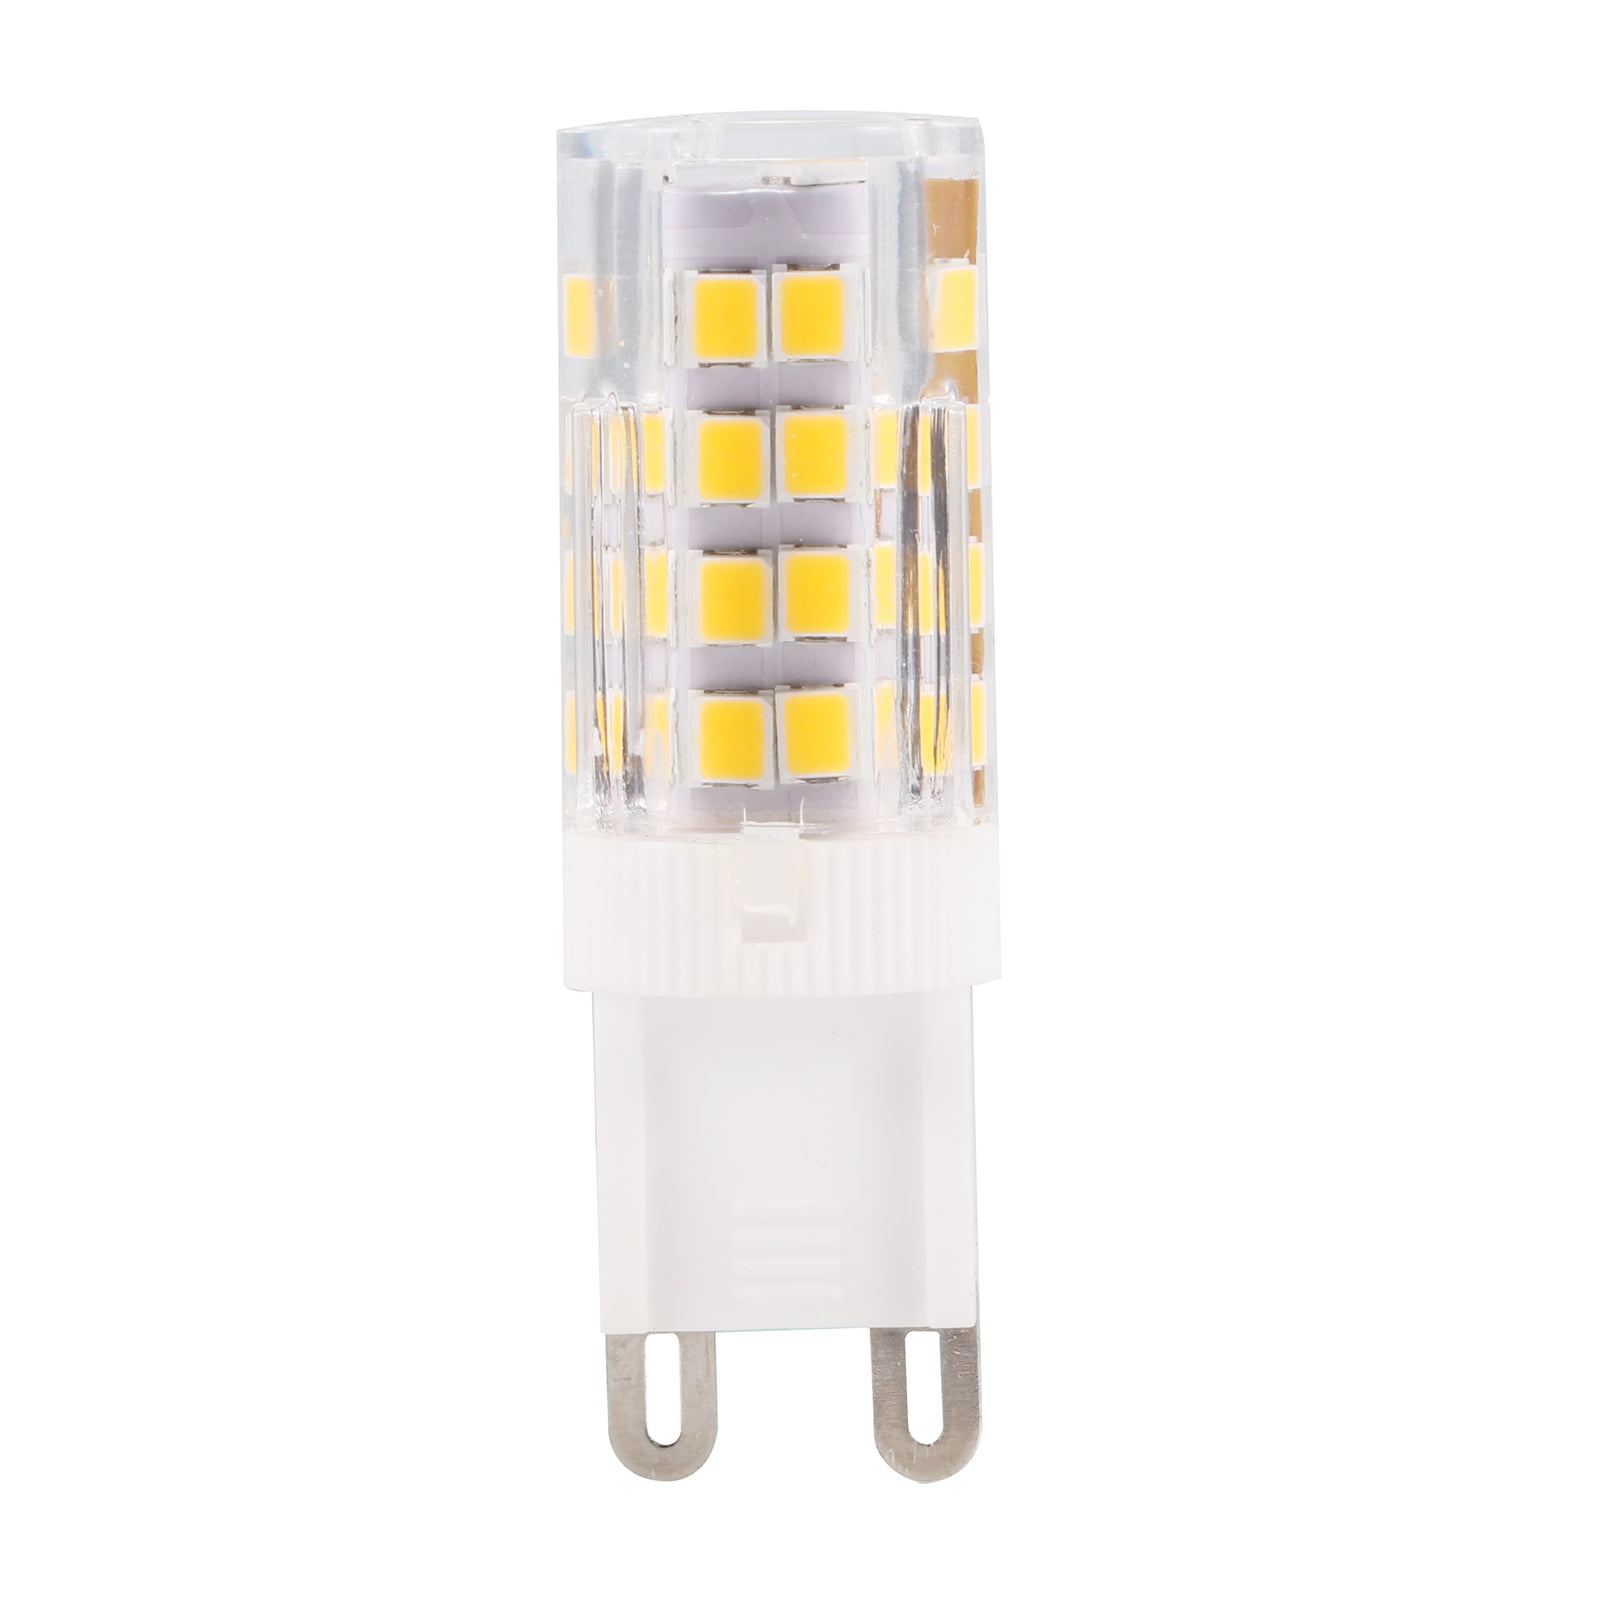 1pcs G9 Base Ceramic Lamp Holder Socket & Cable Halogen LED Bulb Down Light etc 